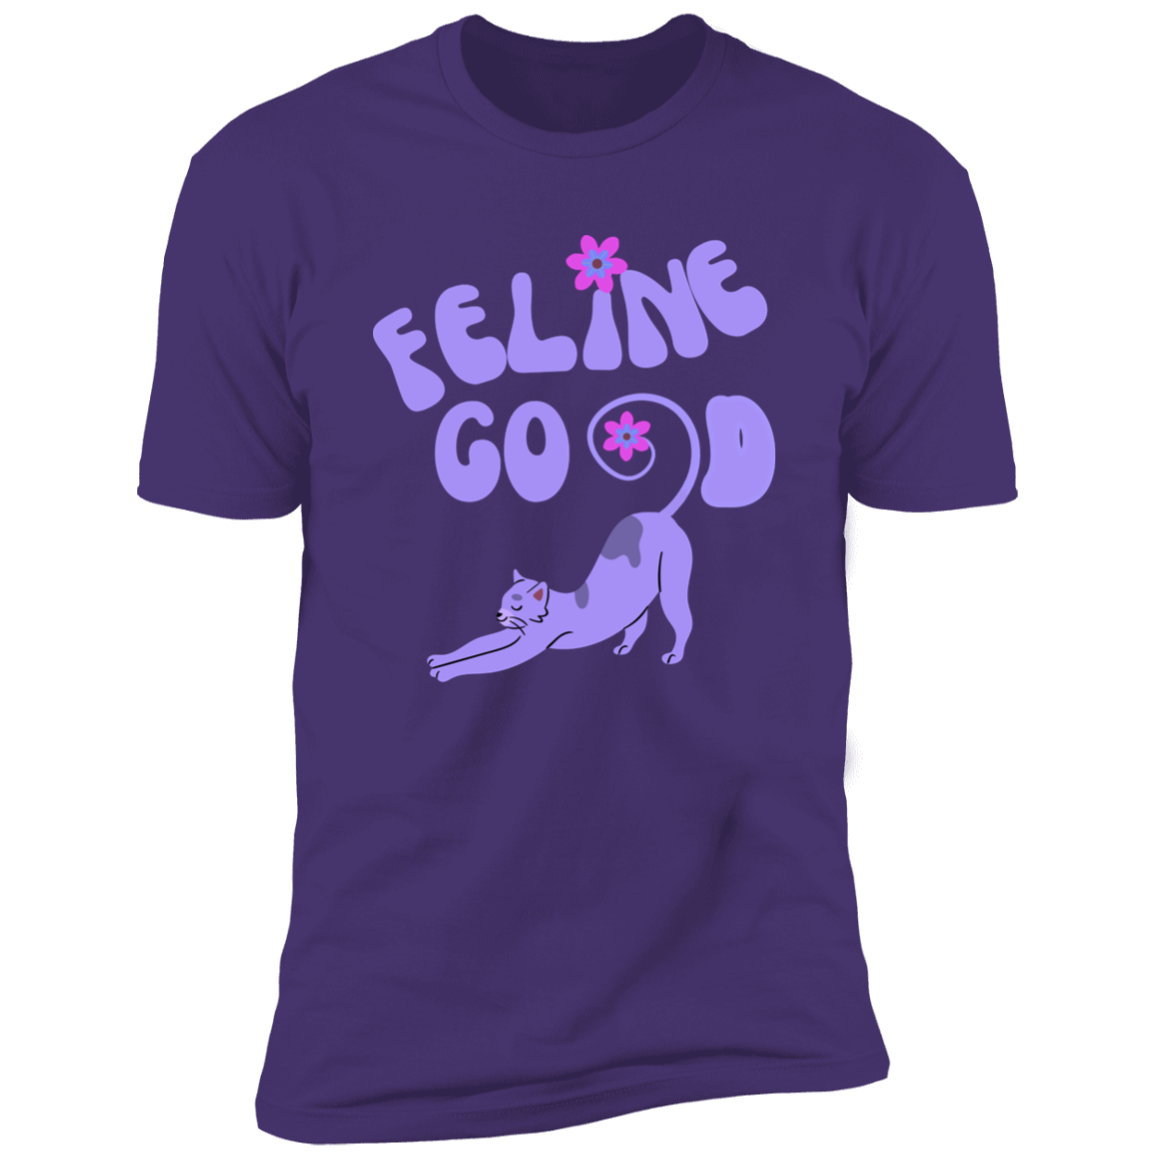 Feline Good Cat T-Shirt, Cat Shirt for humans, in purple rush